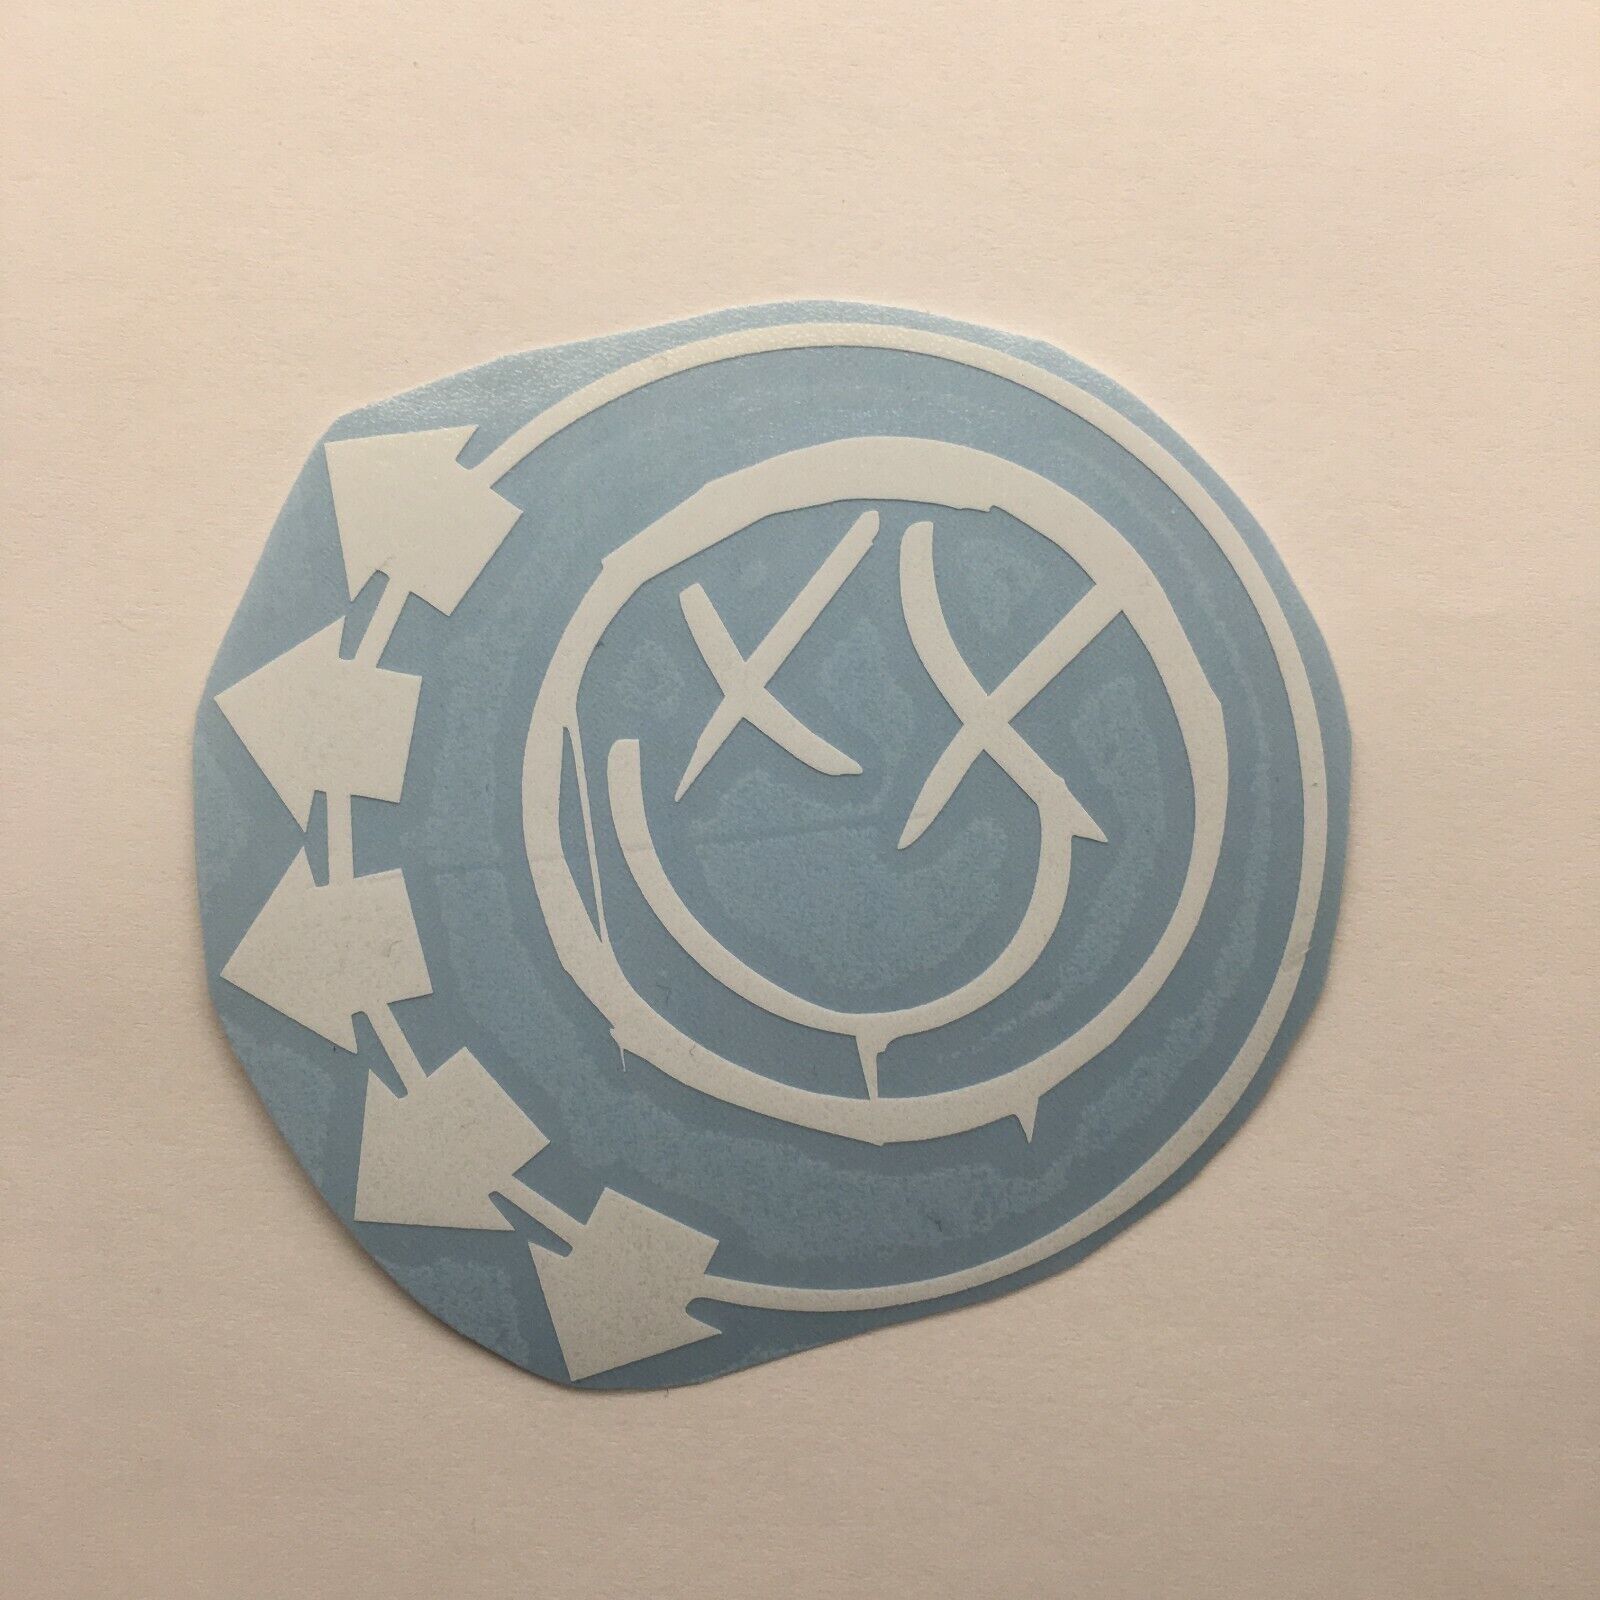 Blink 182 Band Logo Die Cut Vinyl Sticker Classic Hard Rock and Roll Metal Punk